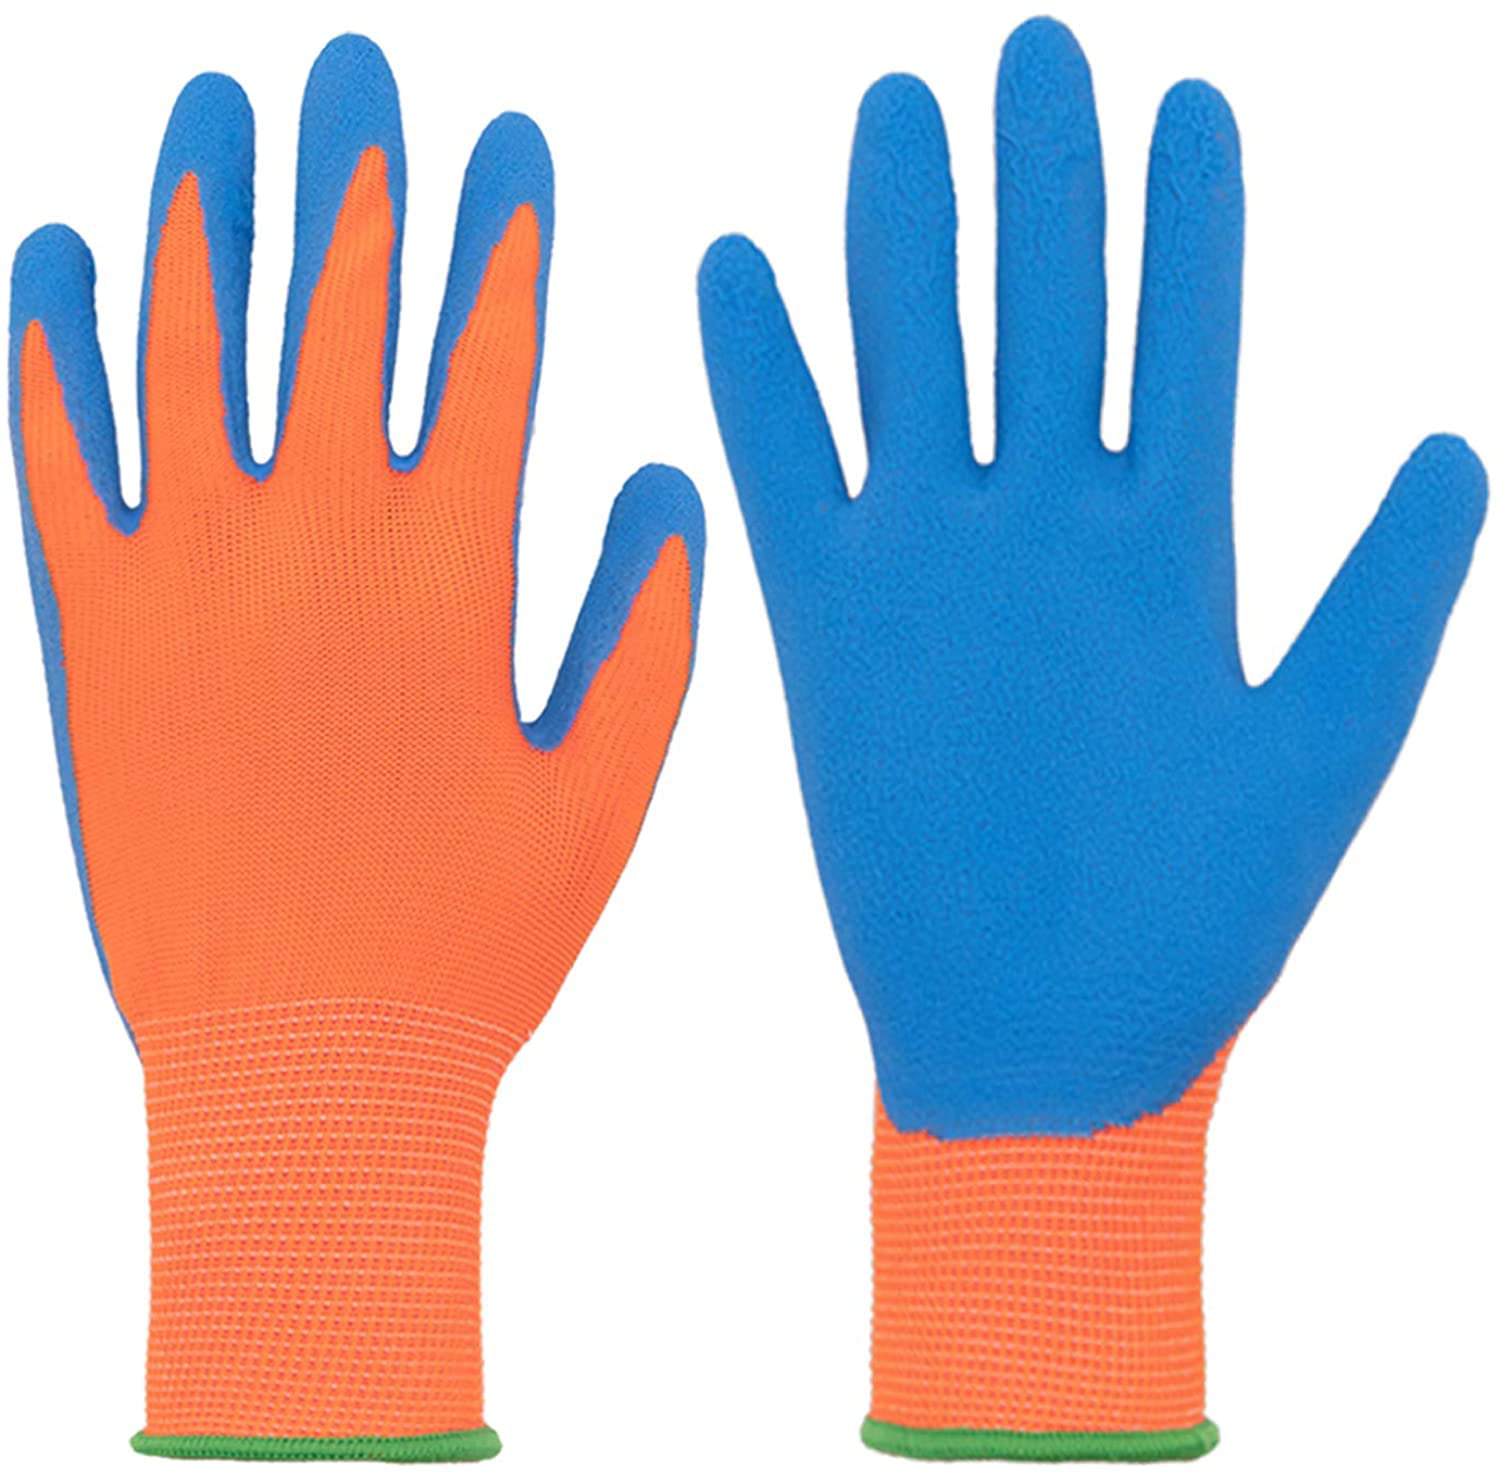 Children Garden Gloves with Rubber Coated Palm Kids Gardening Gloves for Age 3-13 